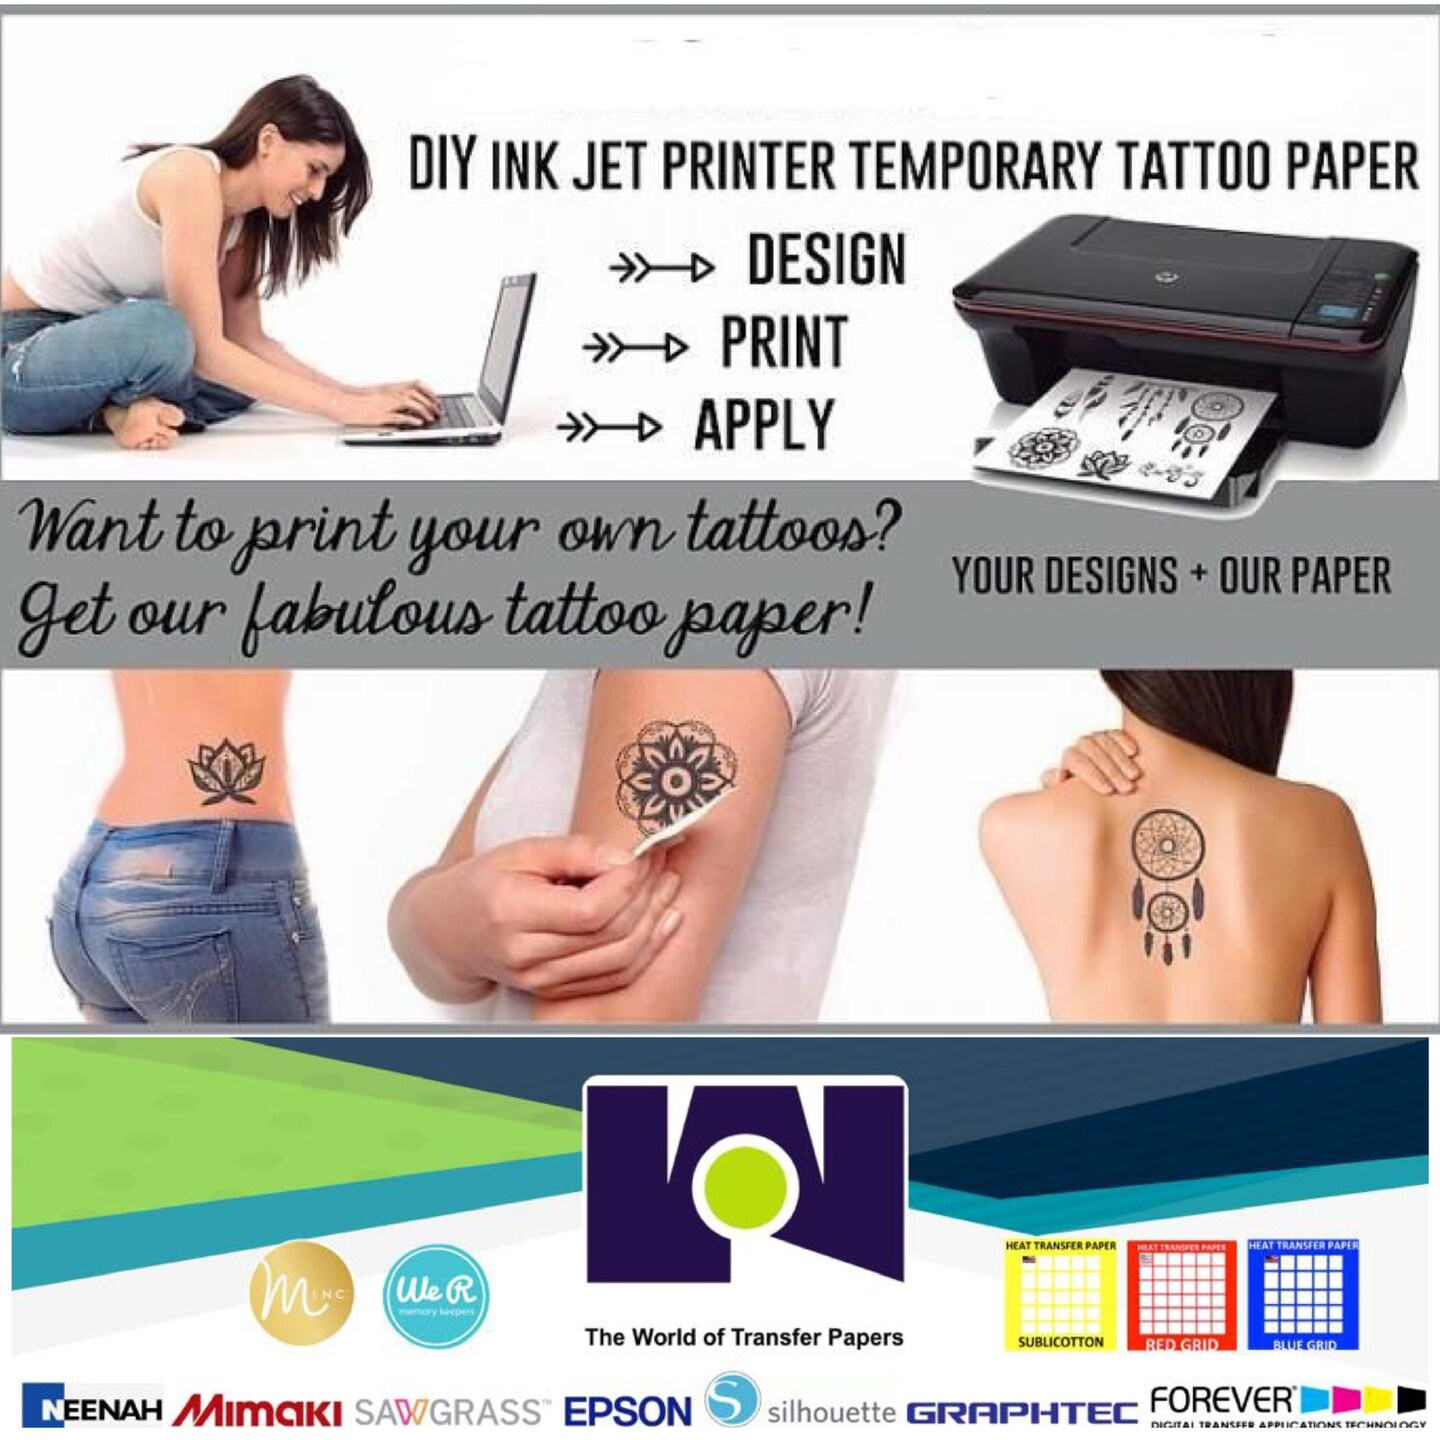 BIC BodyMark Temporary Tattoo Kit, 9 Markers & 6 Stencil Sheets